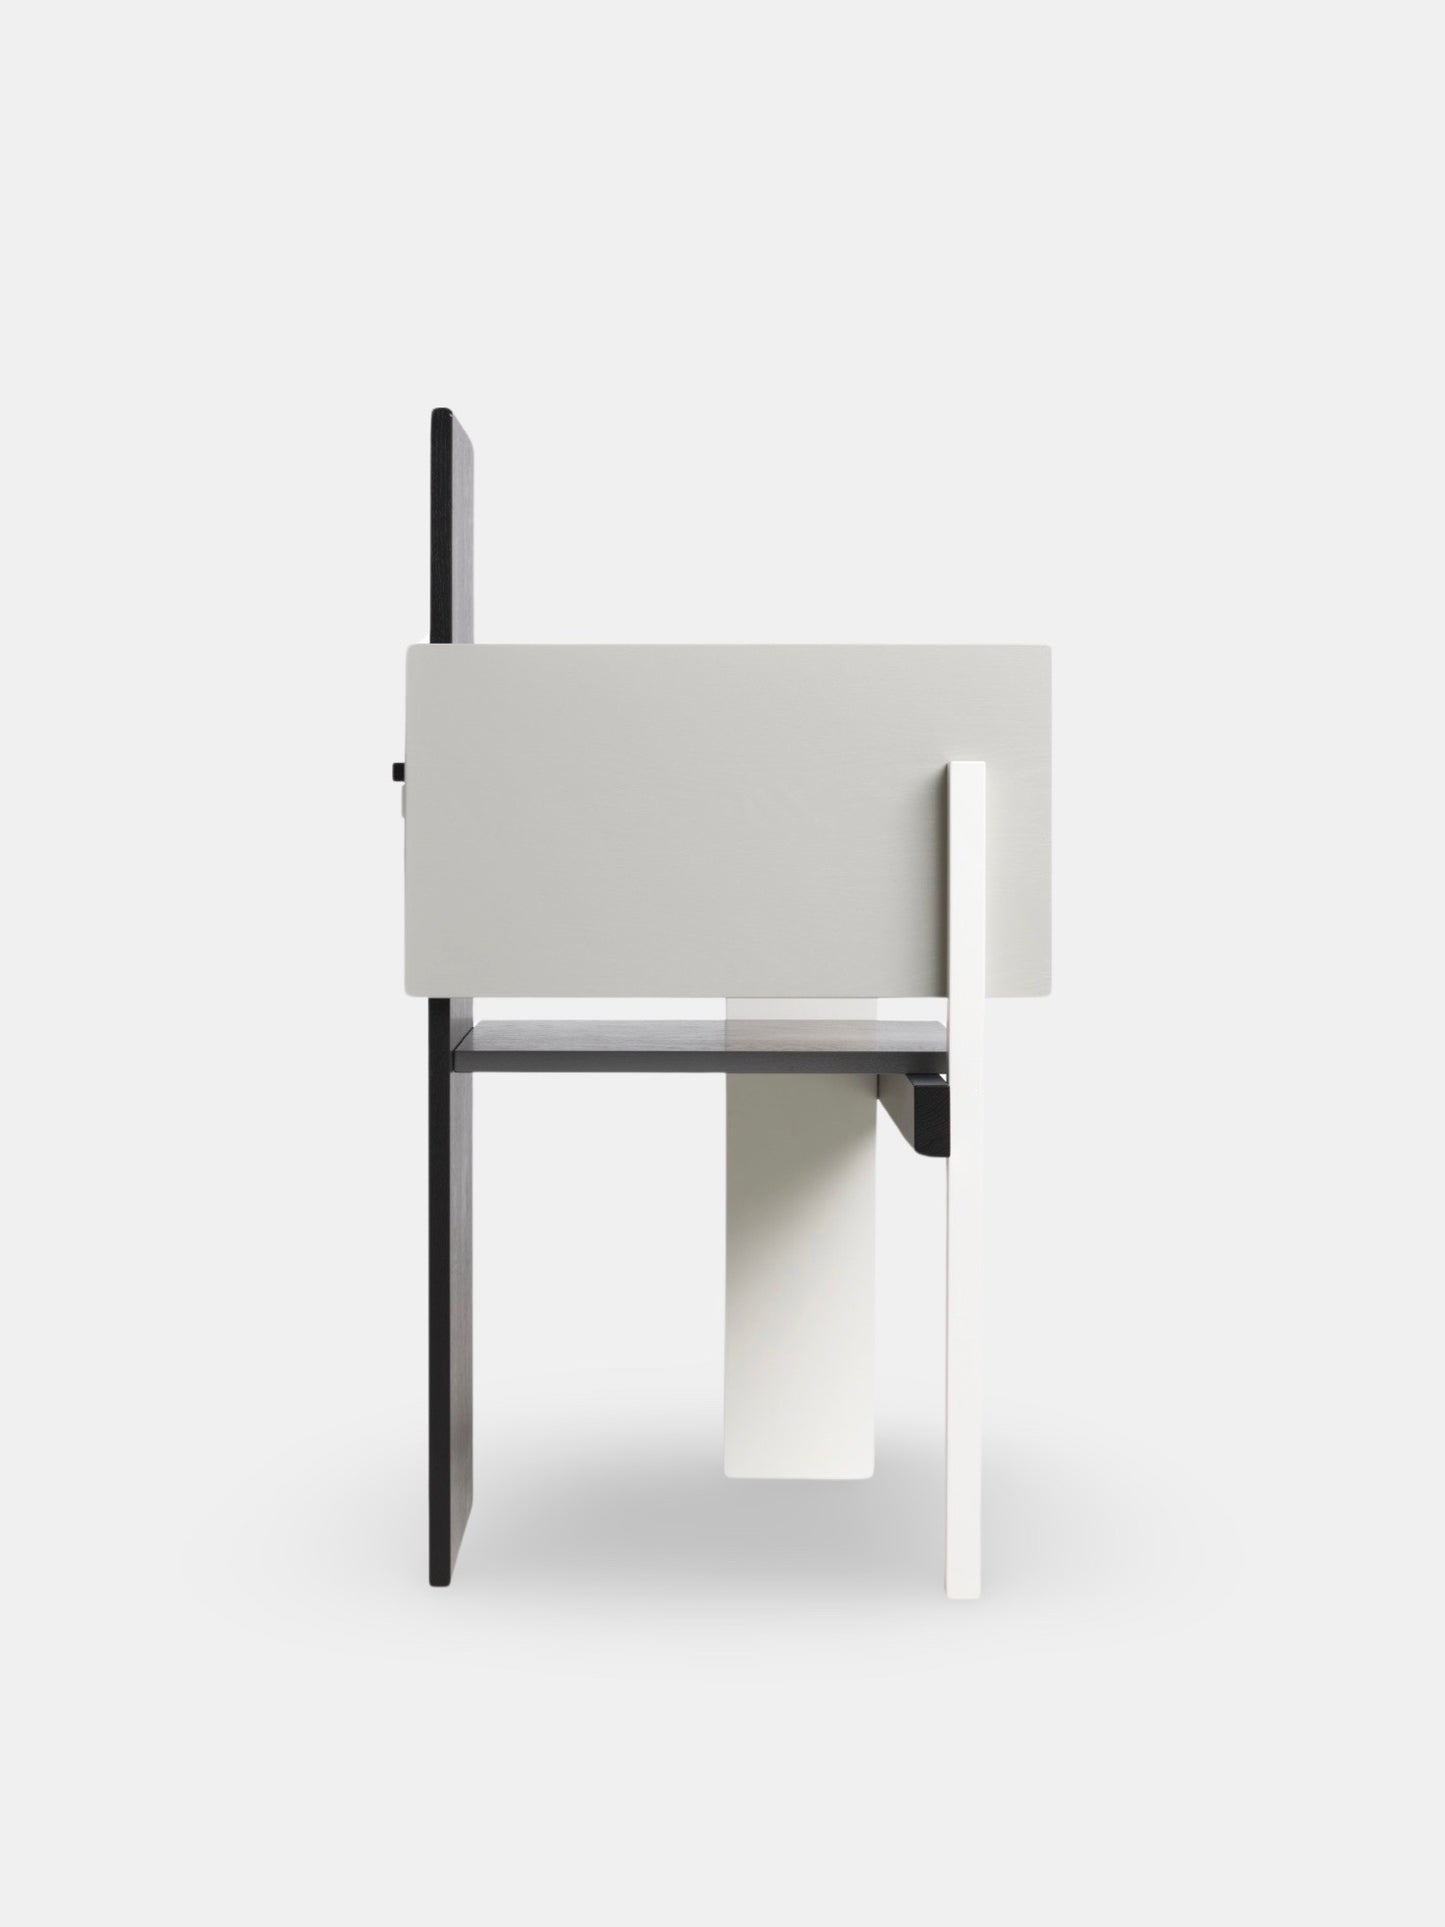 Berlin Chair designed by Gerrit Rietveld, 1923